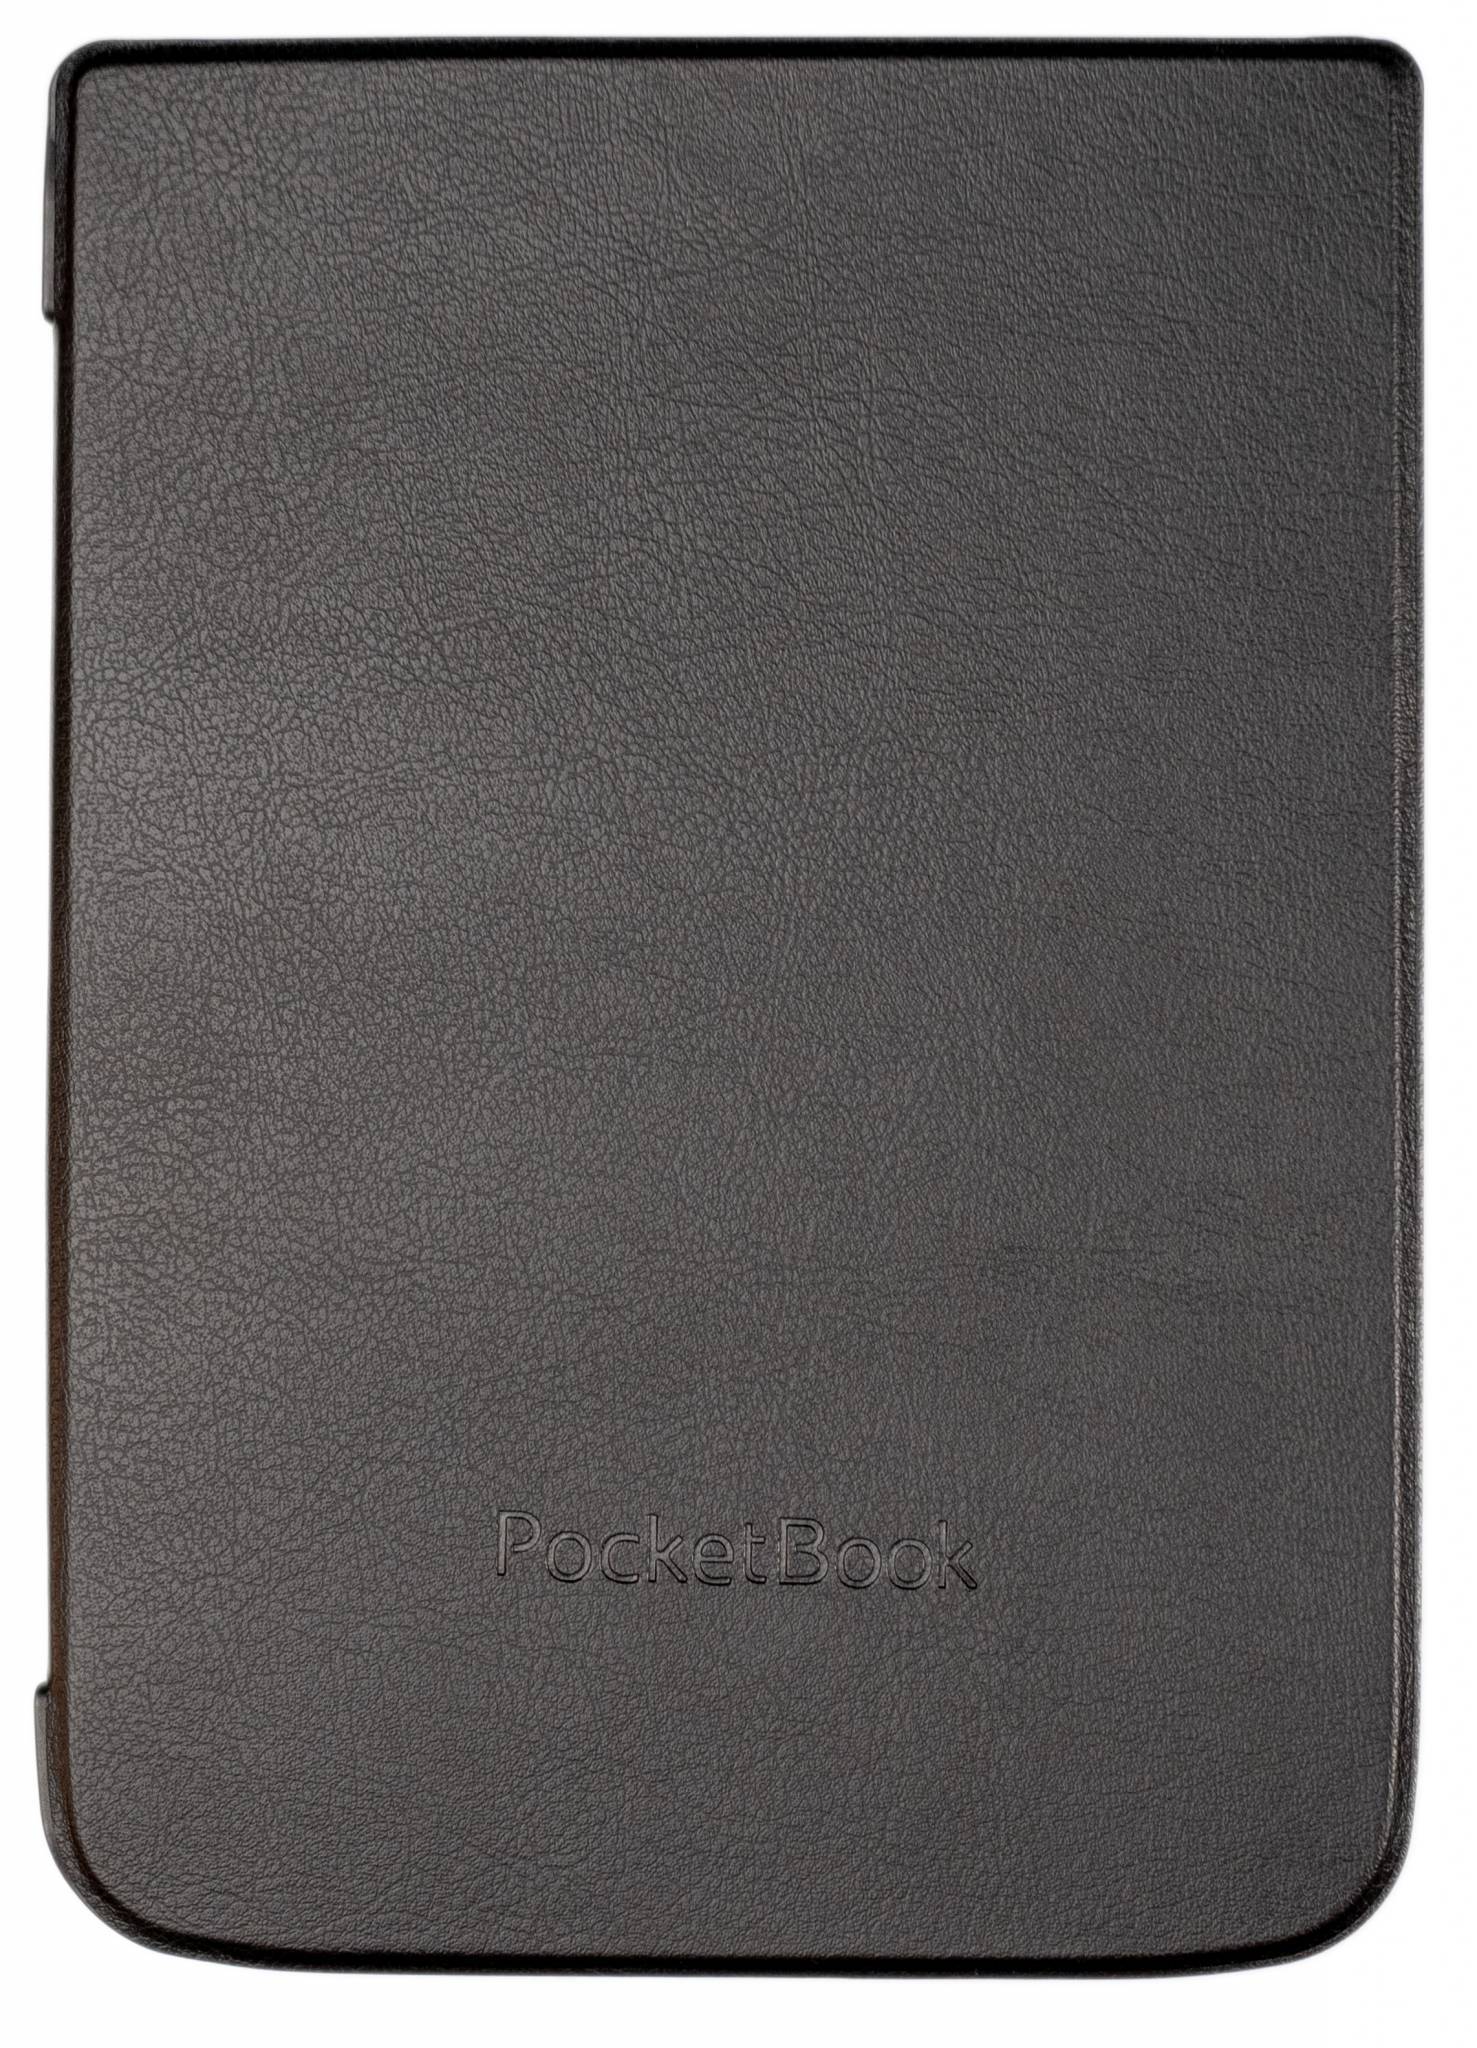 Pocketbook Inkpad Color Leather Case - 5